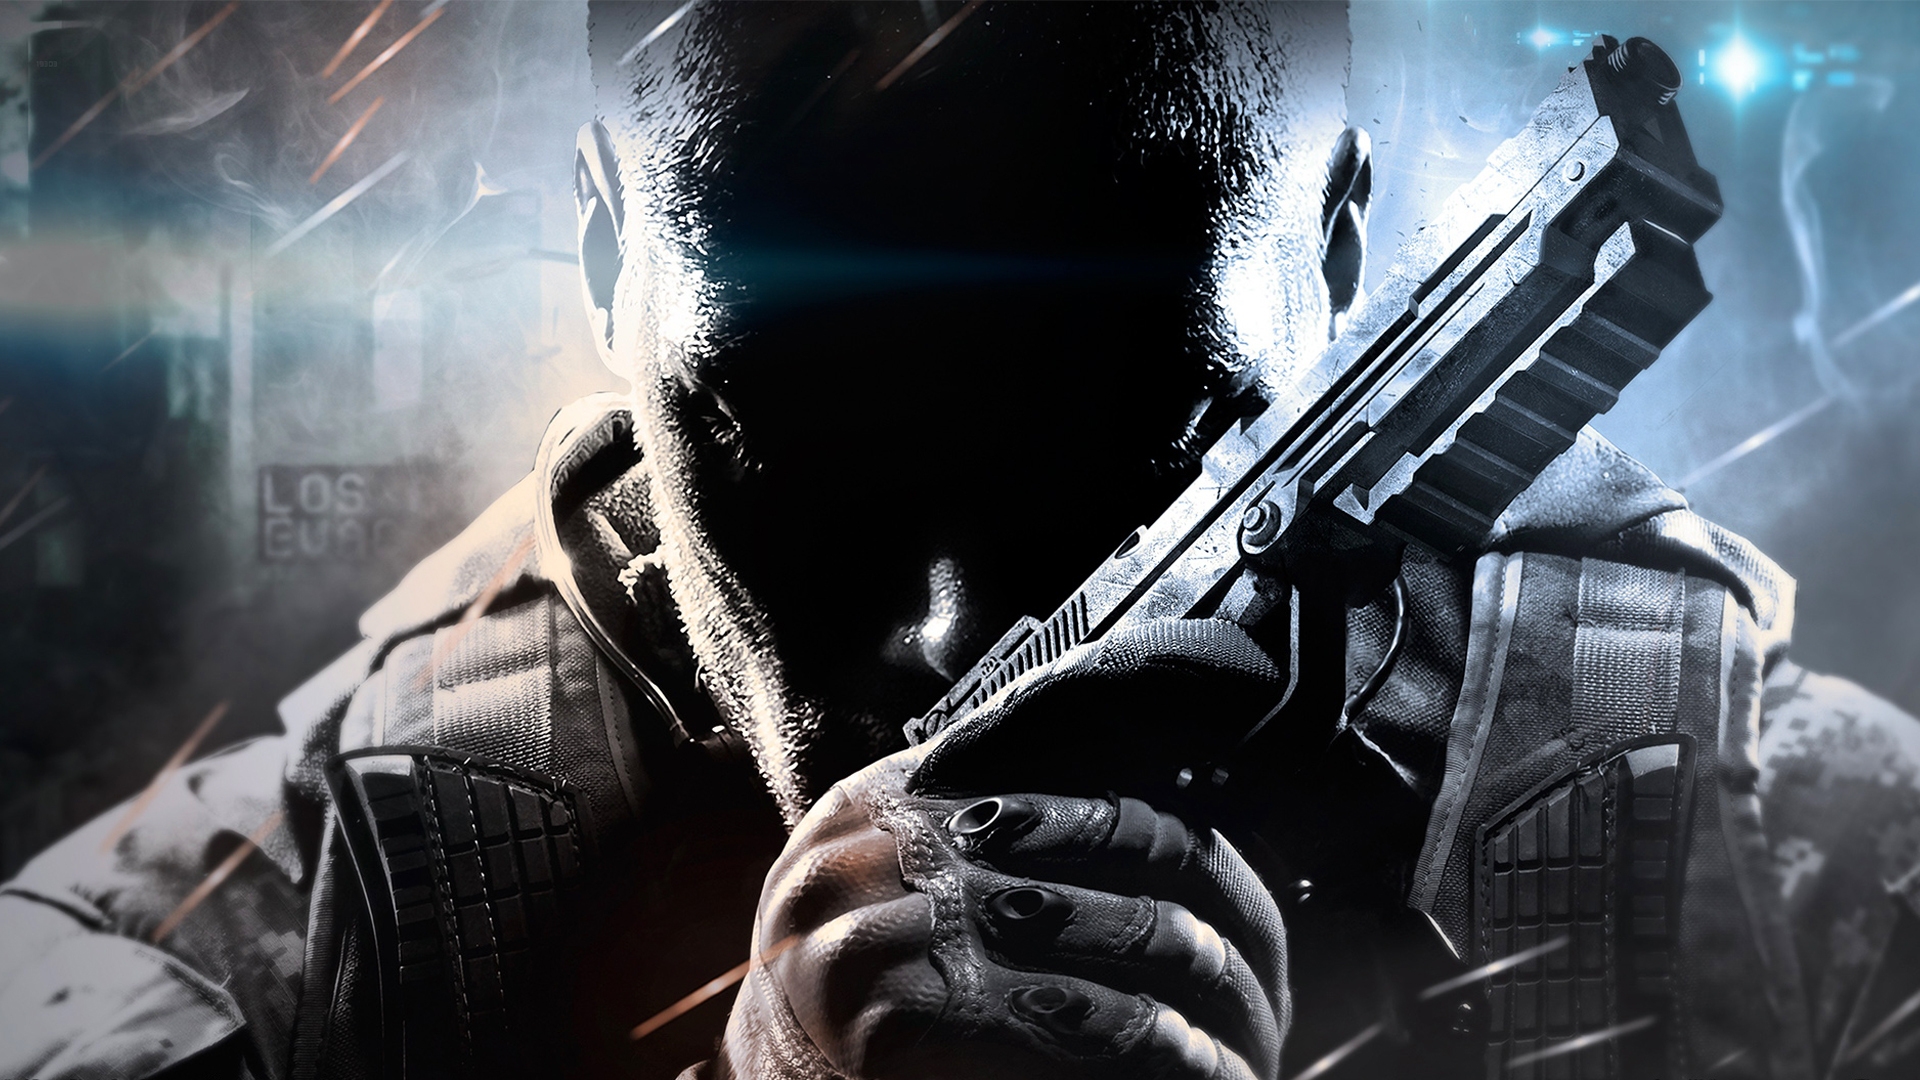  Of Duty Black Ops II HD Wallpapers Backgrounds